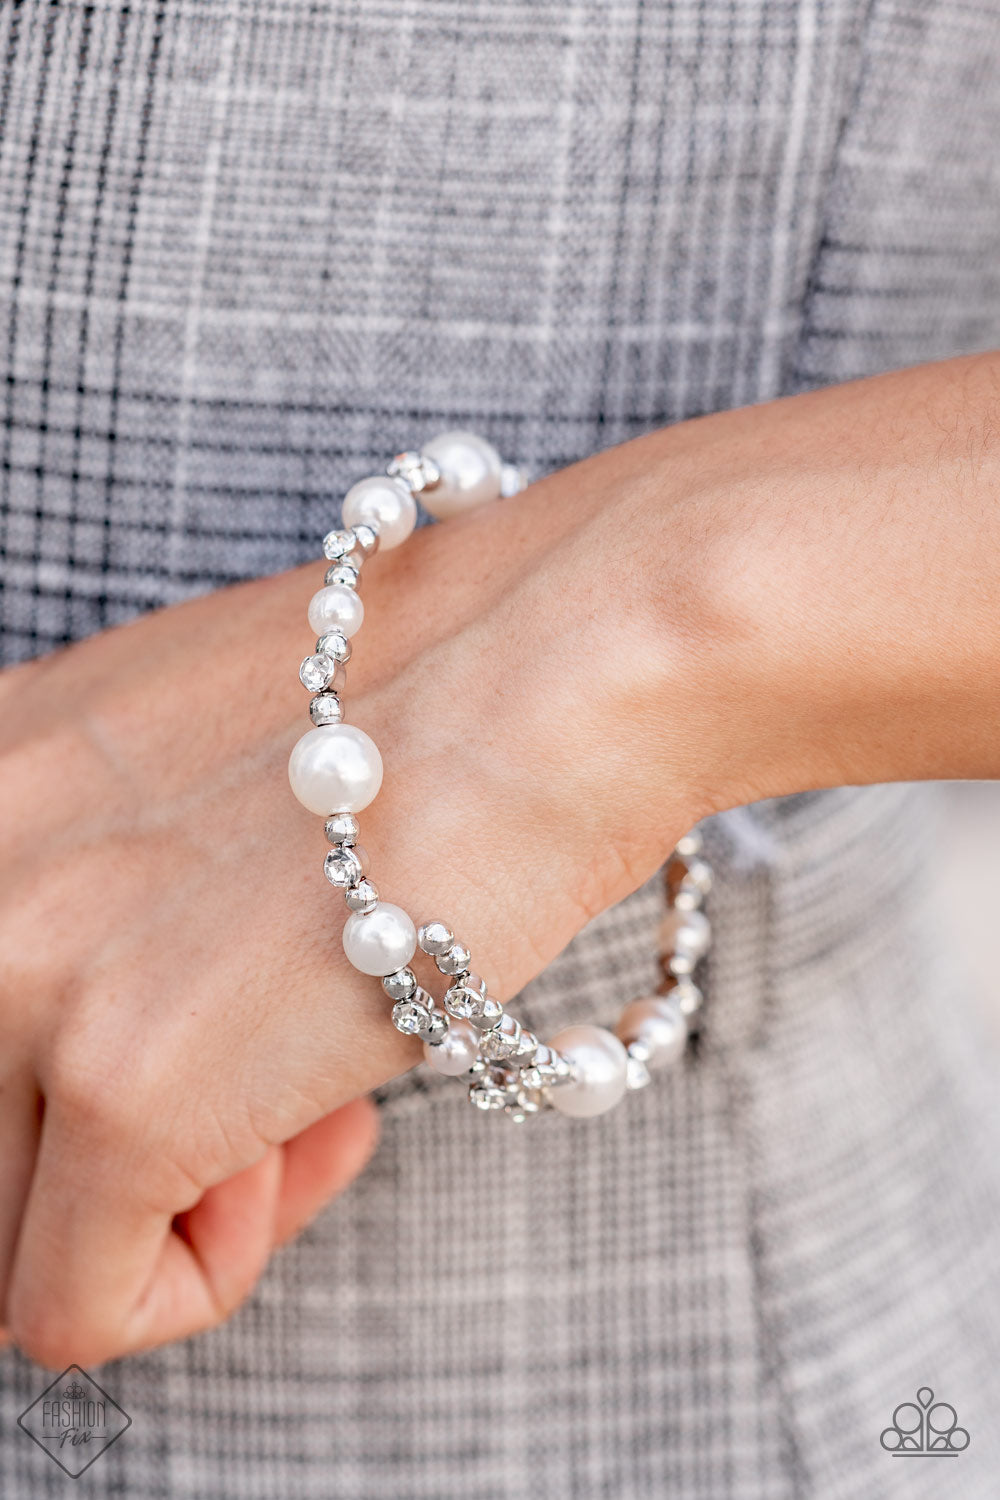 Paparazzi Chicly Celebrity Fashion Fix - White Bracelet - A Finishing Touch Jewelry